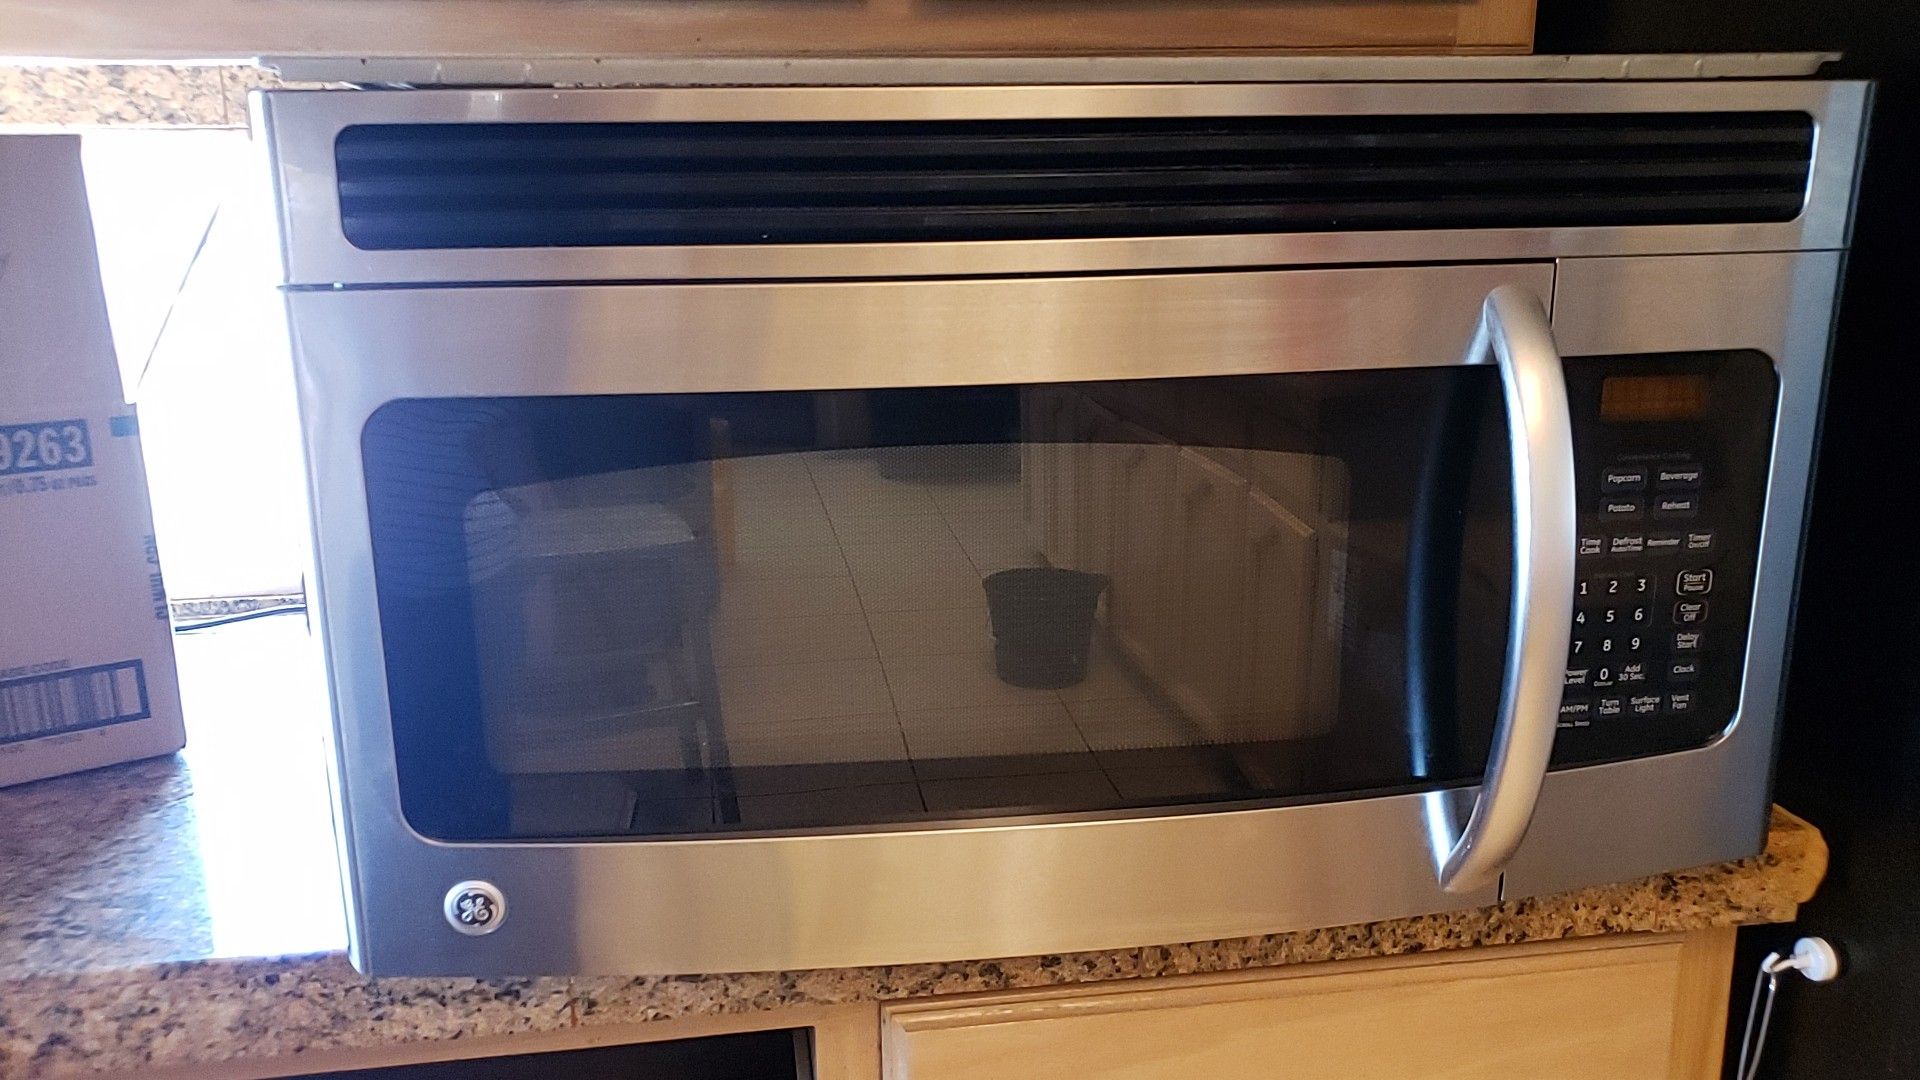 Microwave over the range stainless steel digital